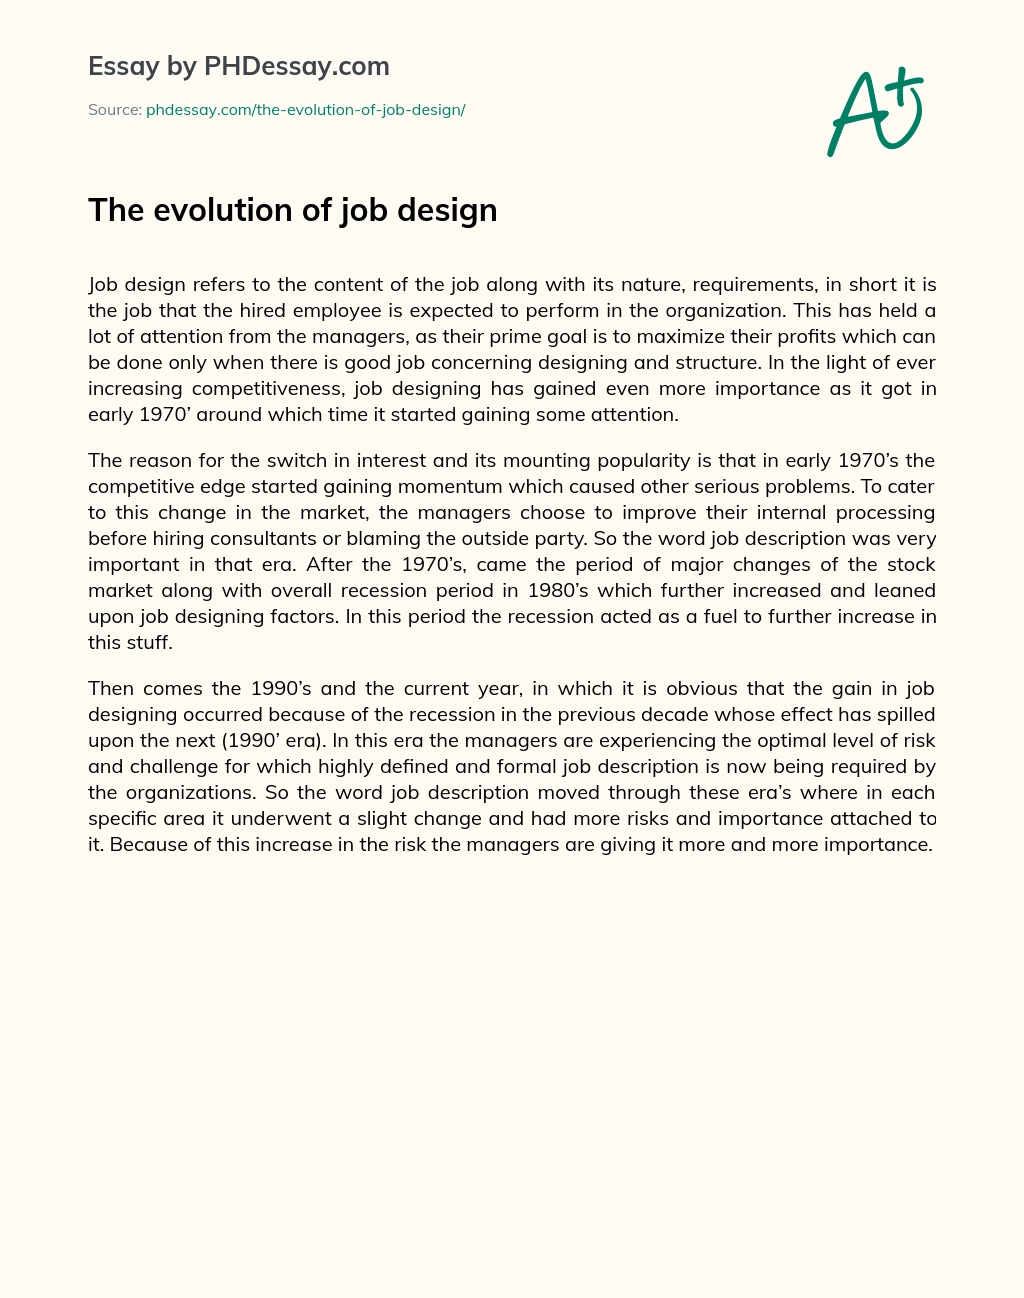 The evolution of job design essay